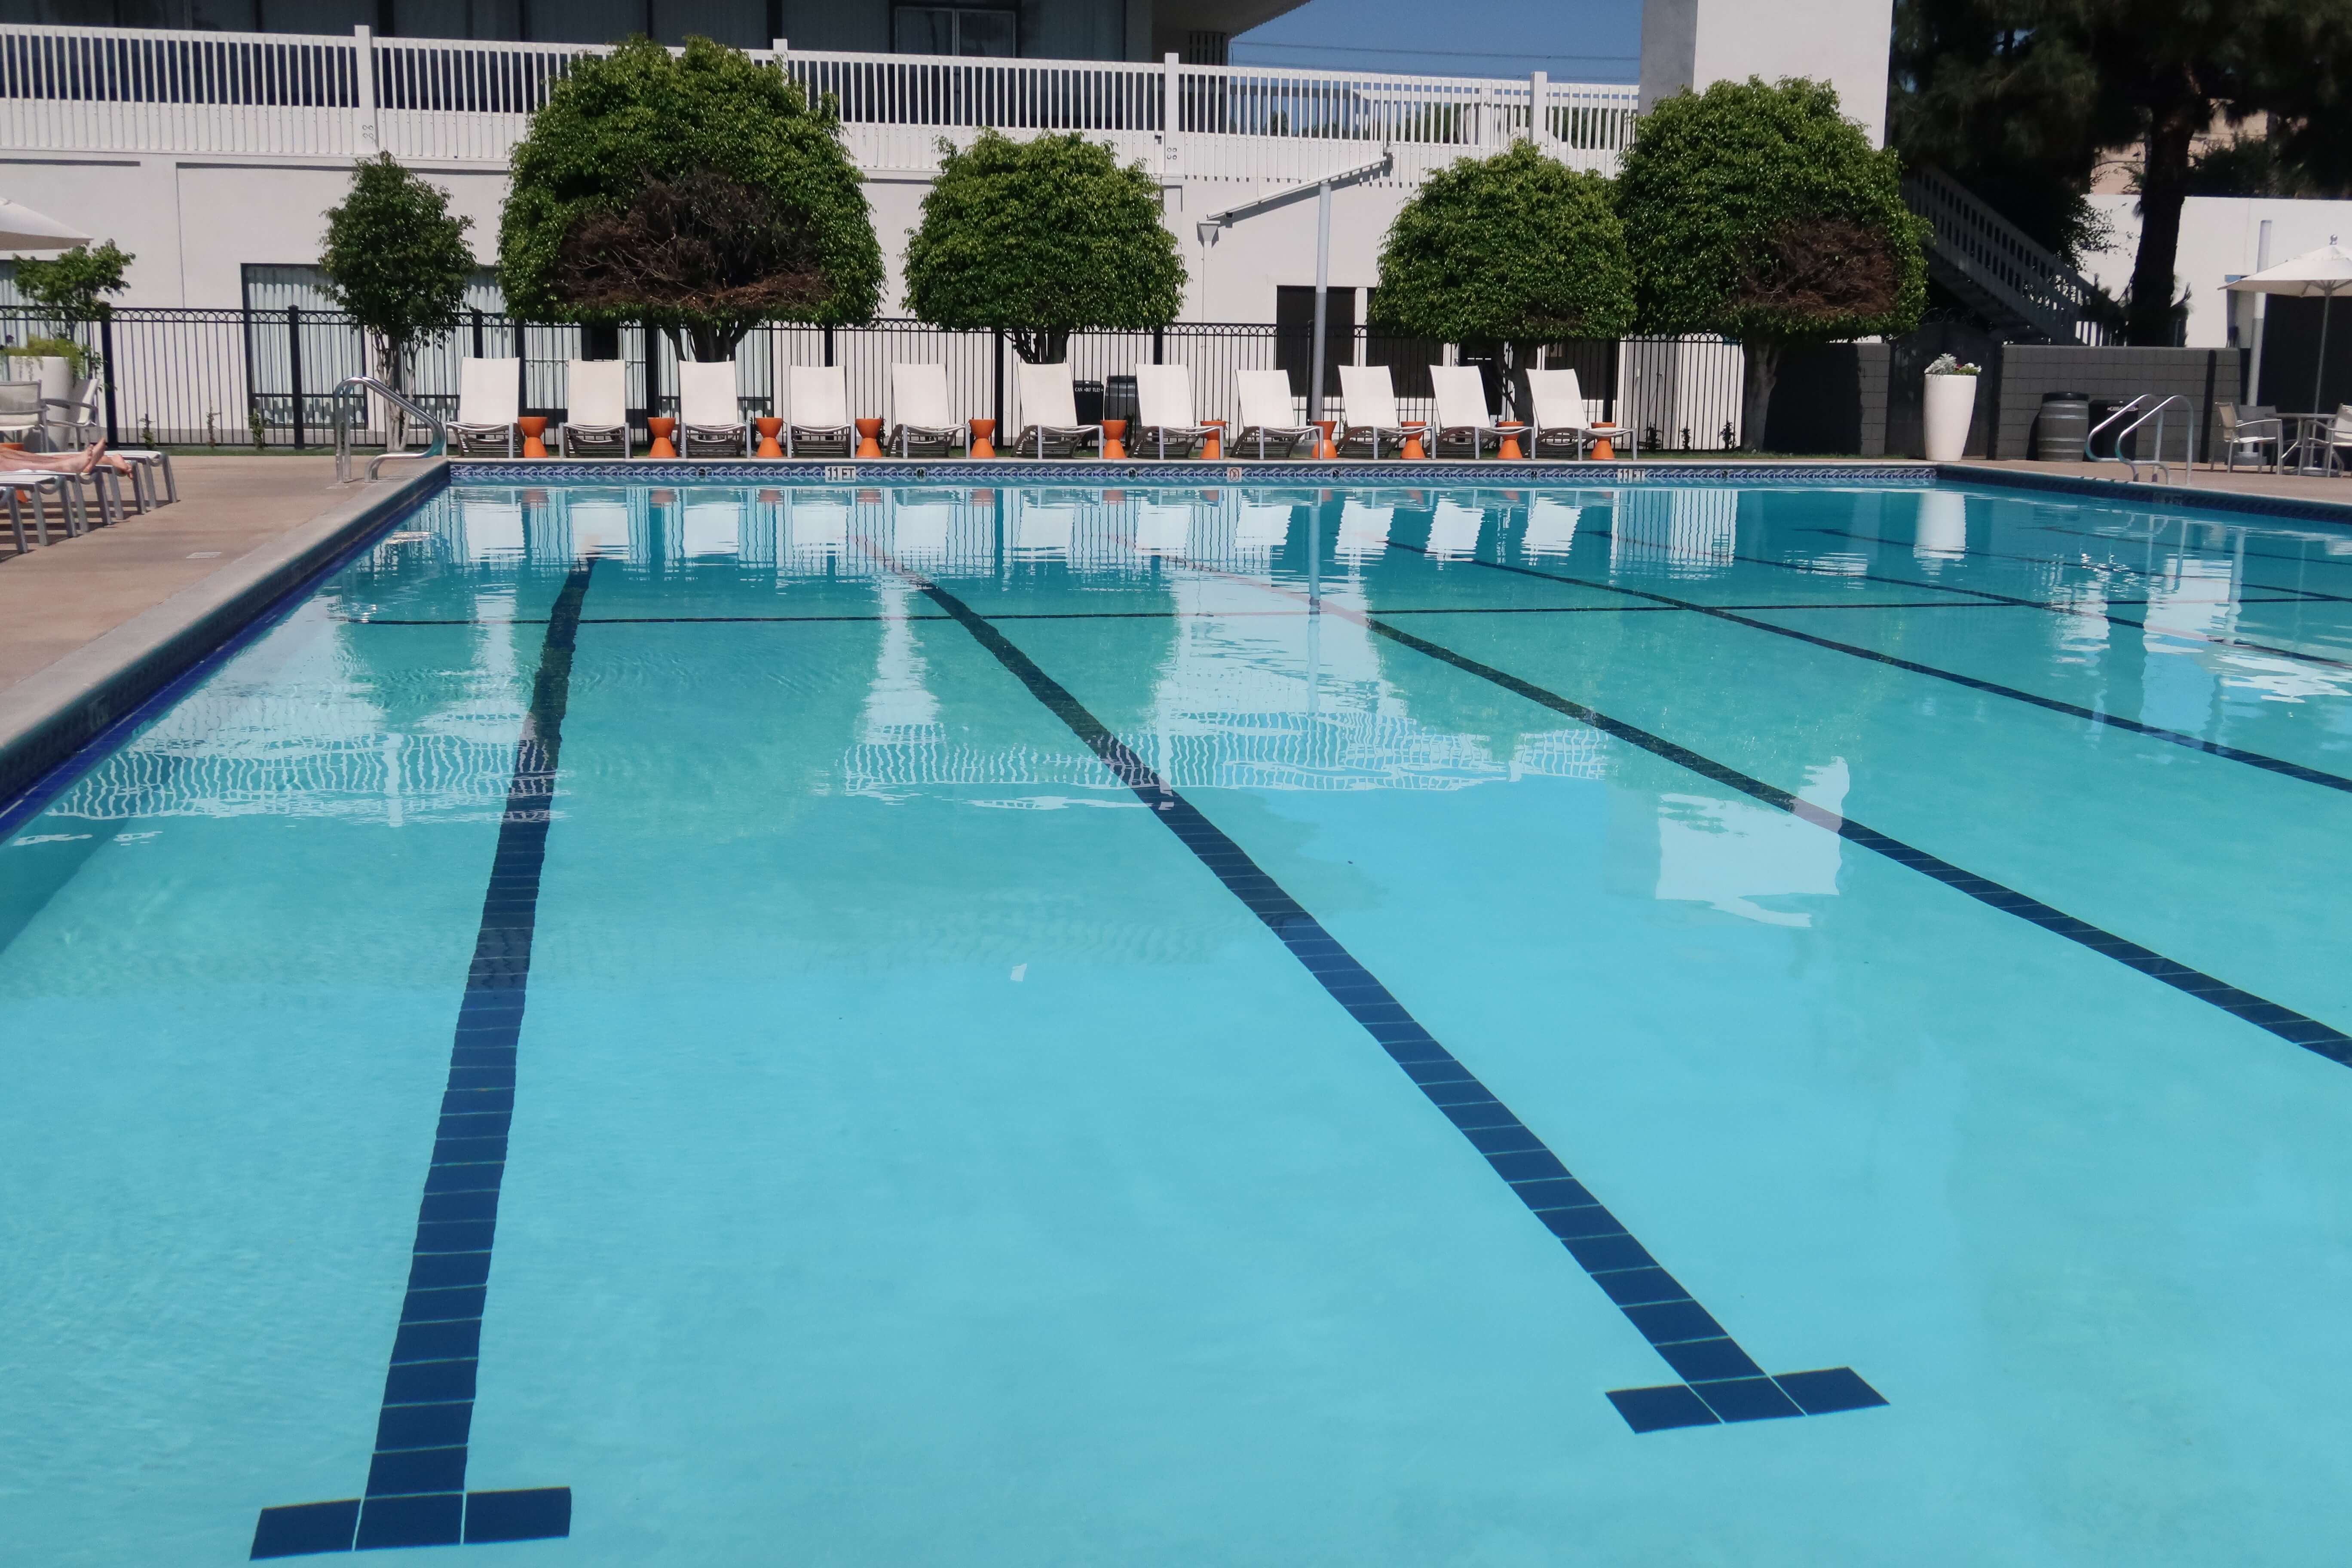 The Anaheim Hotel pool within walking distance of Disneyland